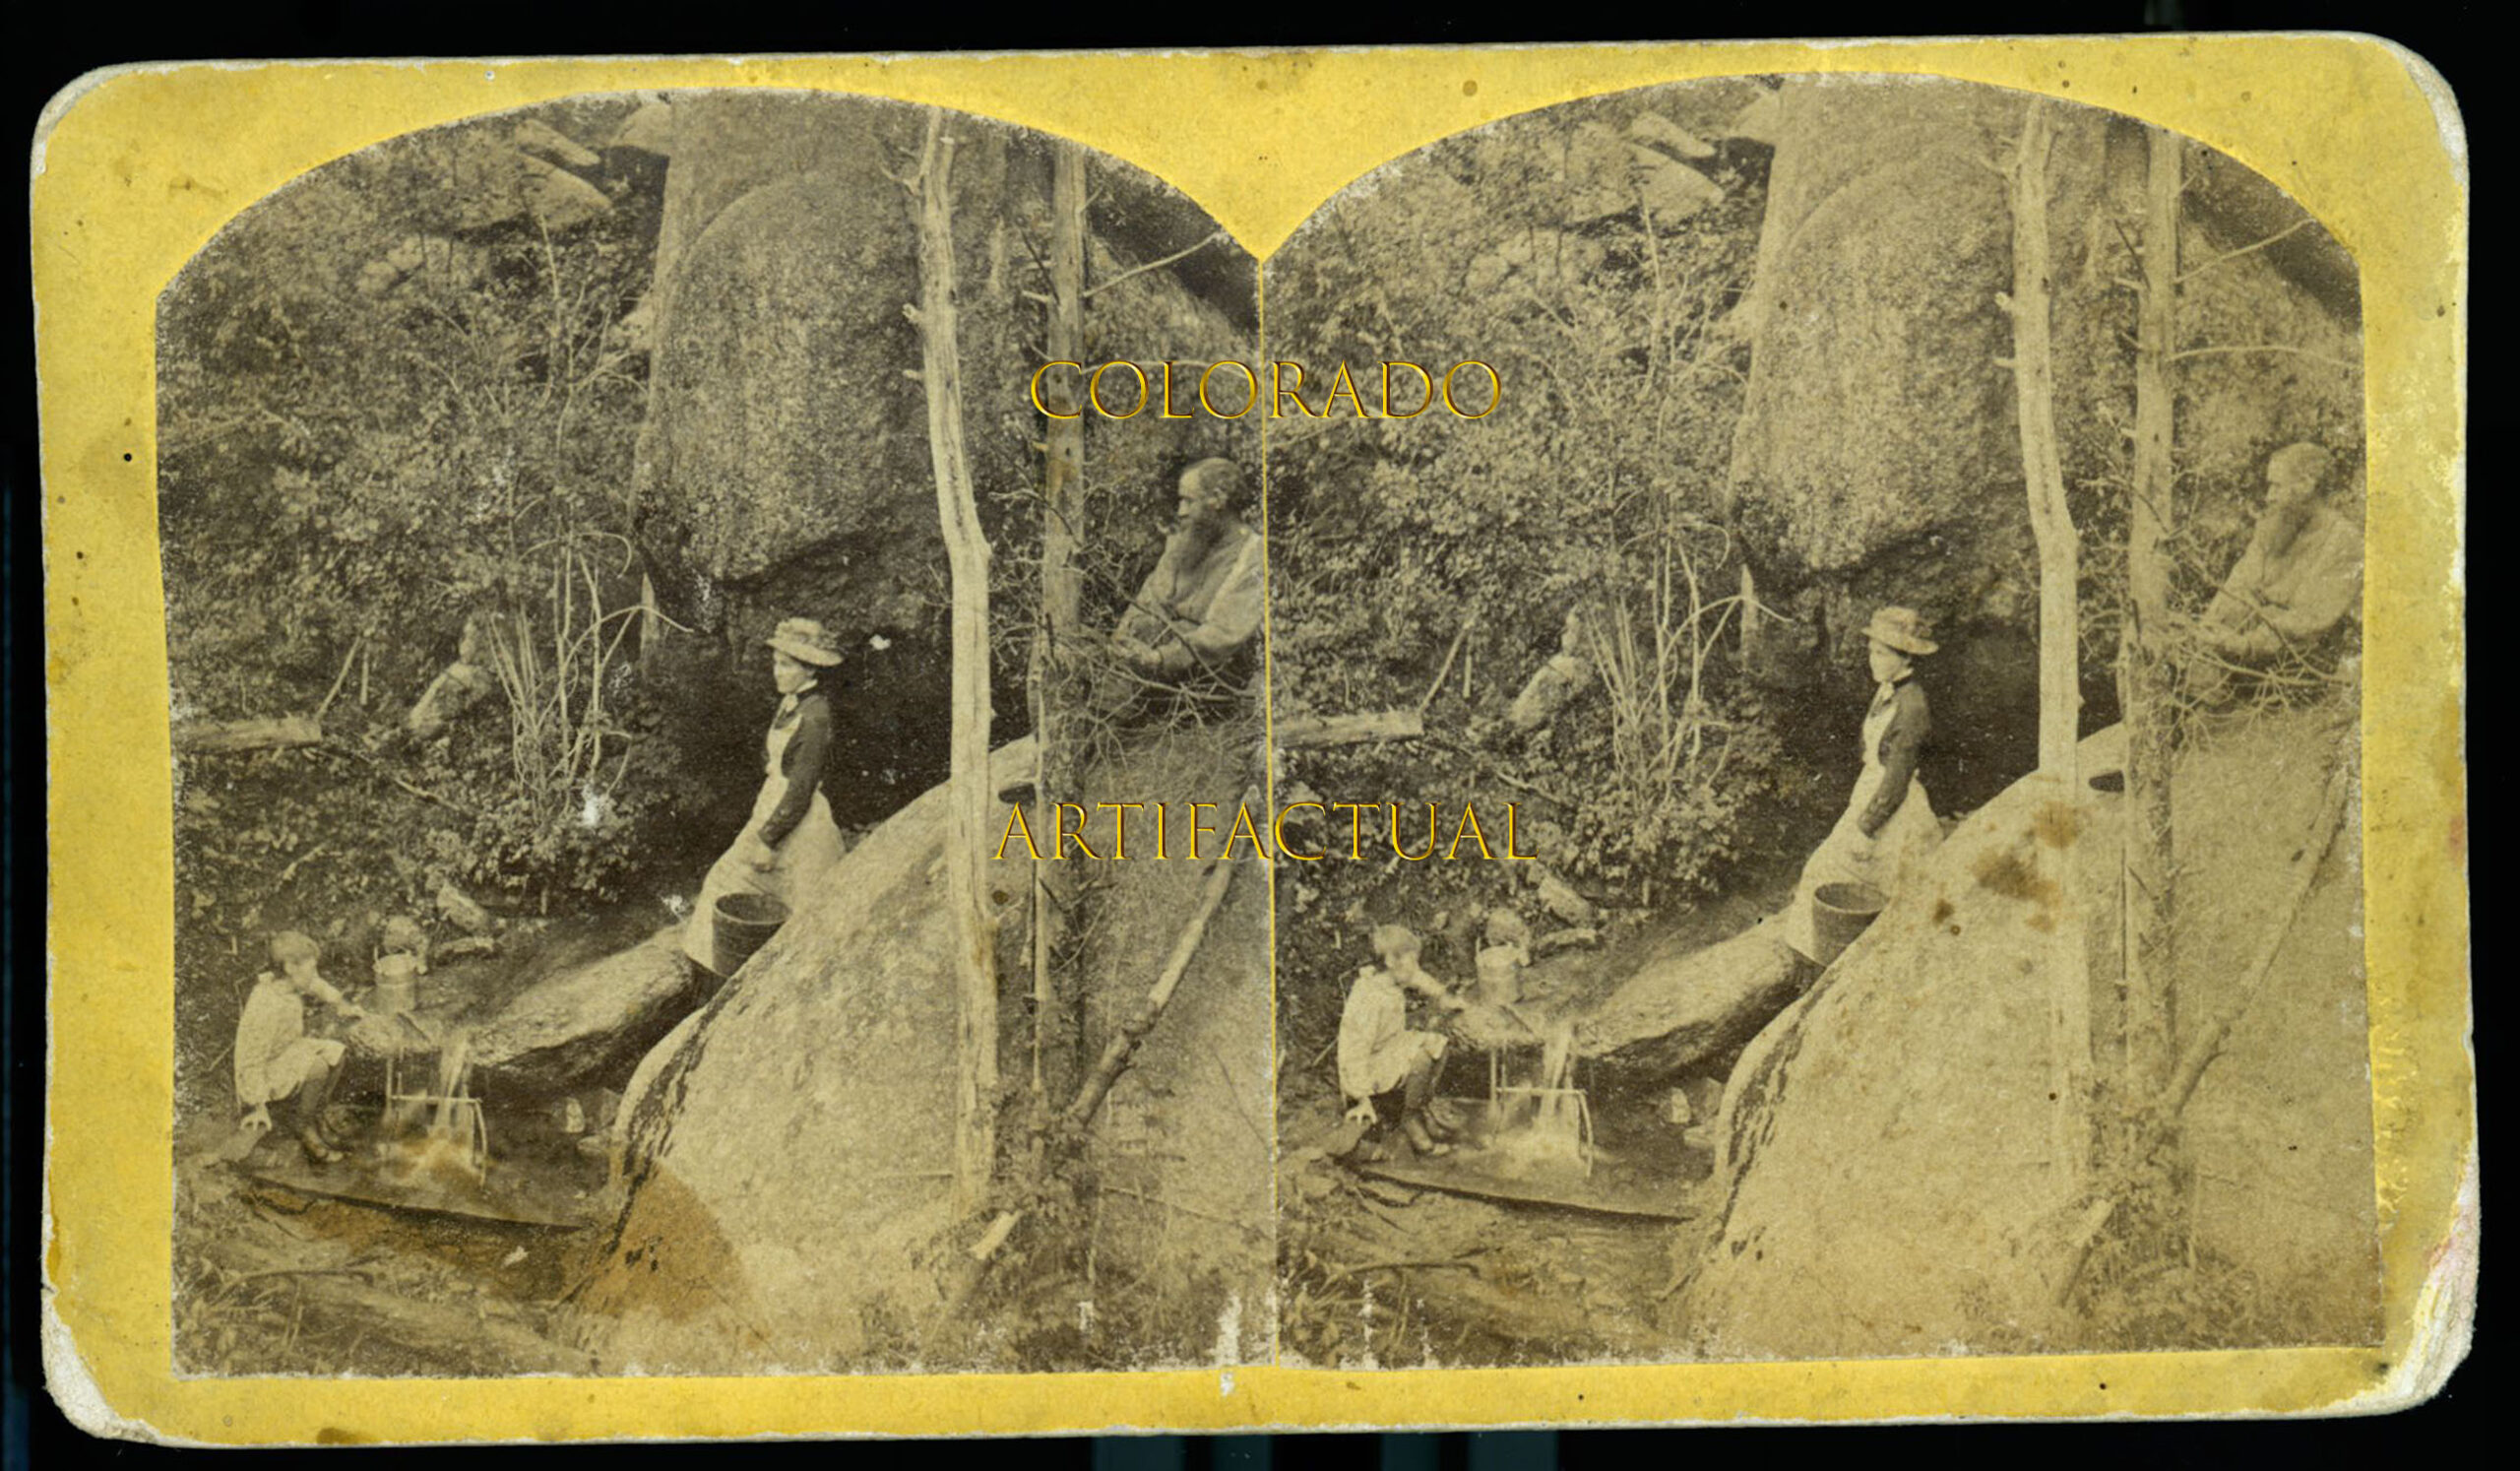 McCREERY’S SPRING #31 J. R. RIDDLE’S SERIES OF VIEWS OF ESTES PARK, COLORADO photographs 1880